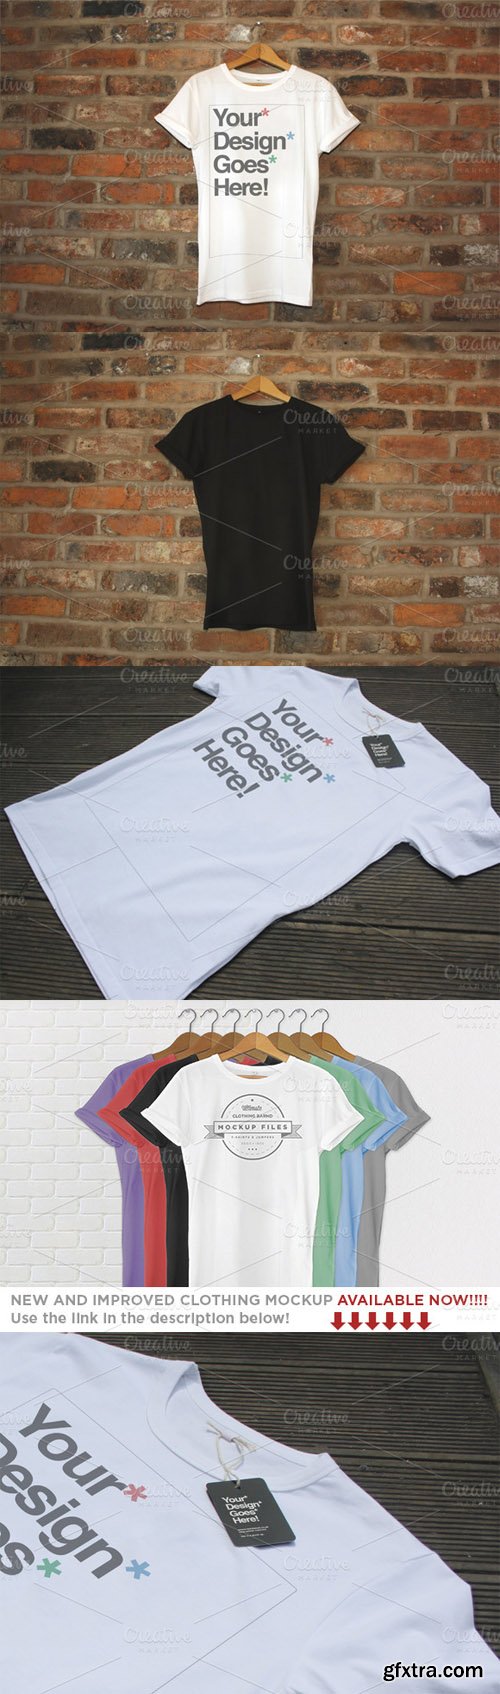 Clothing Brand T-Shirt Mockups - CreativeMarket 8746 » GFxtra